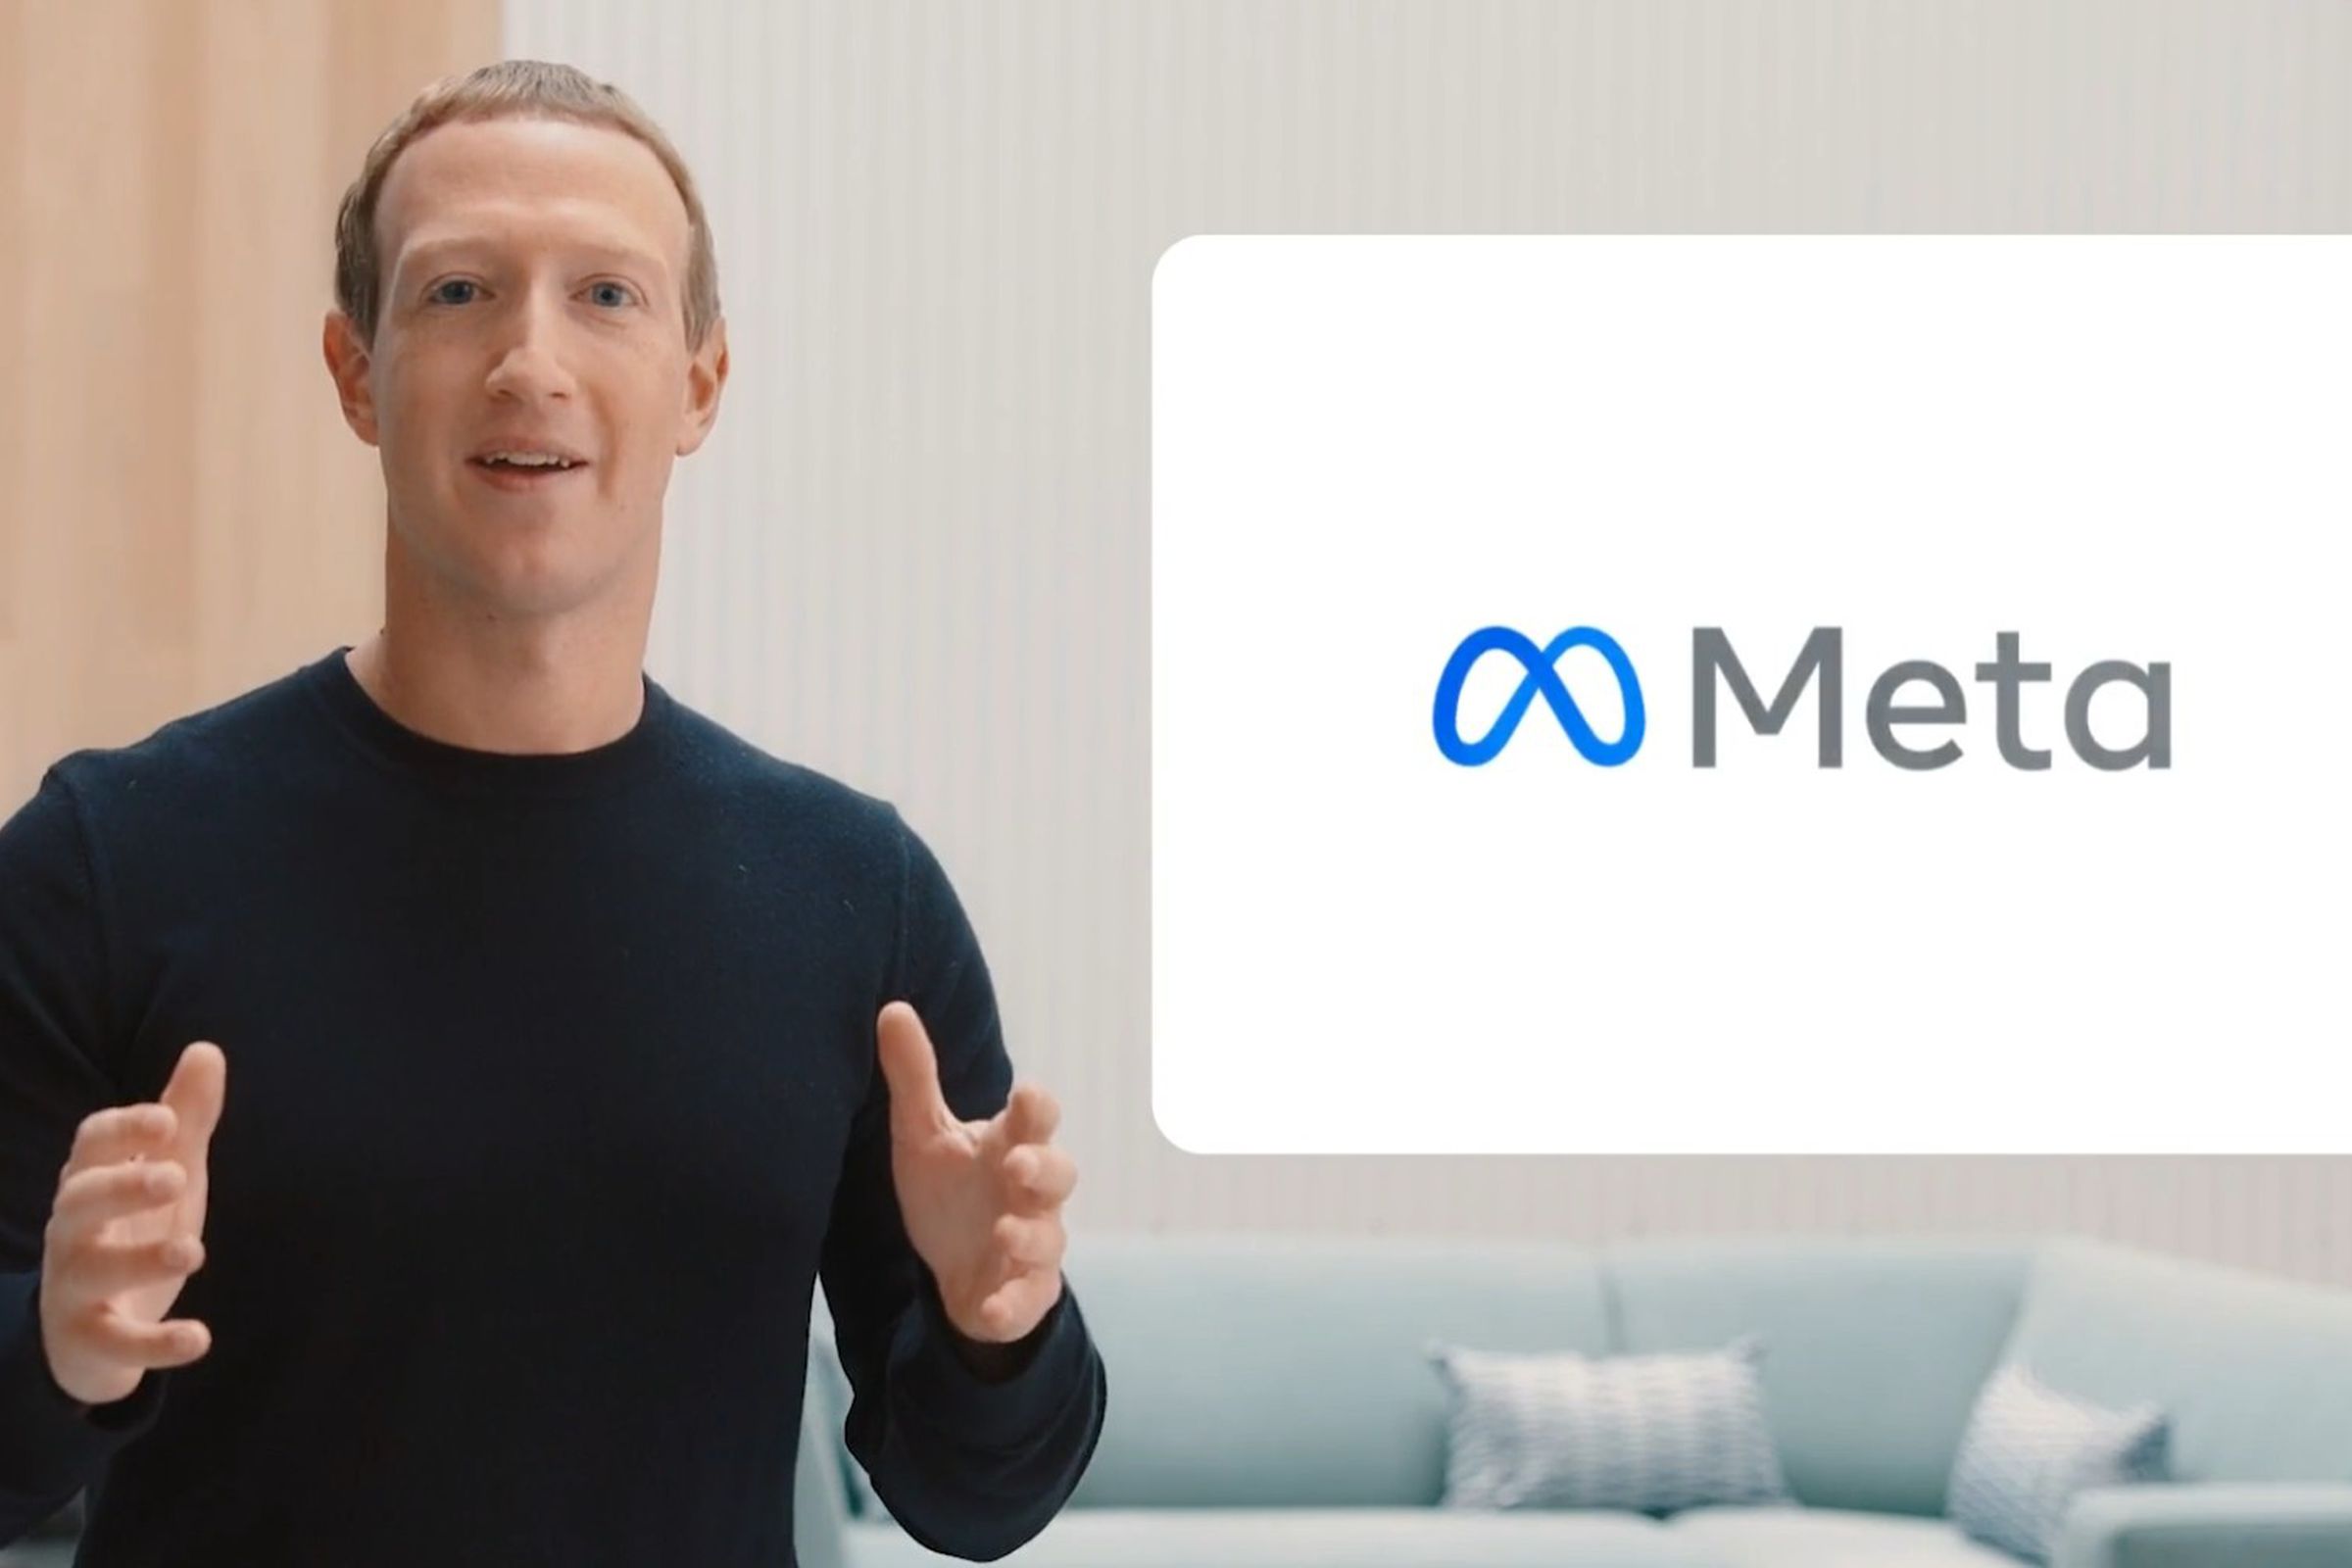 Mark Zuckerberg announced that Facebook’s new name will be “Meta.” 